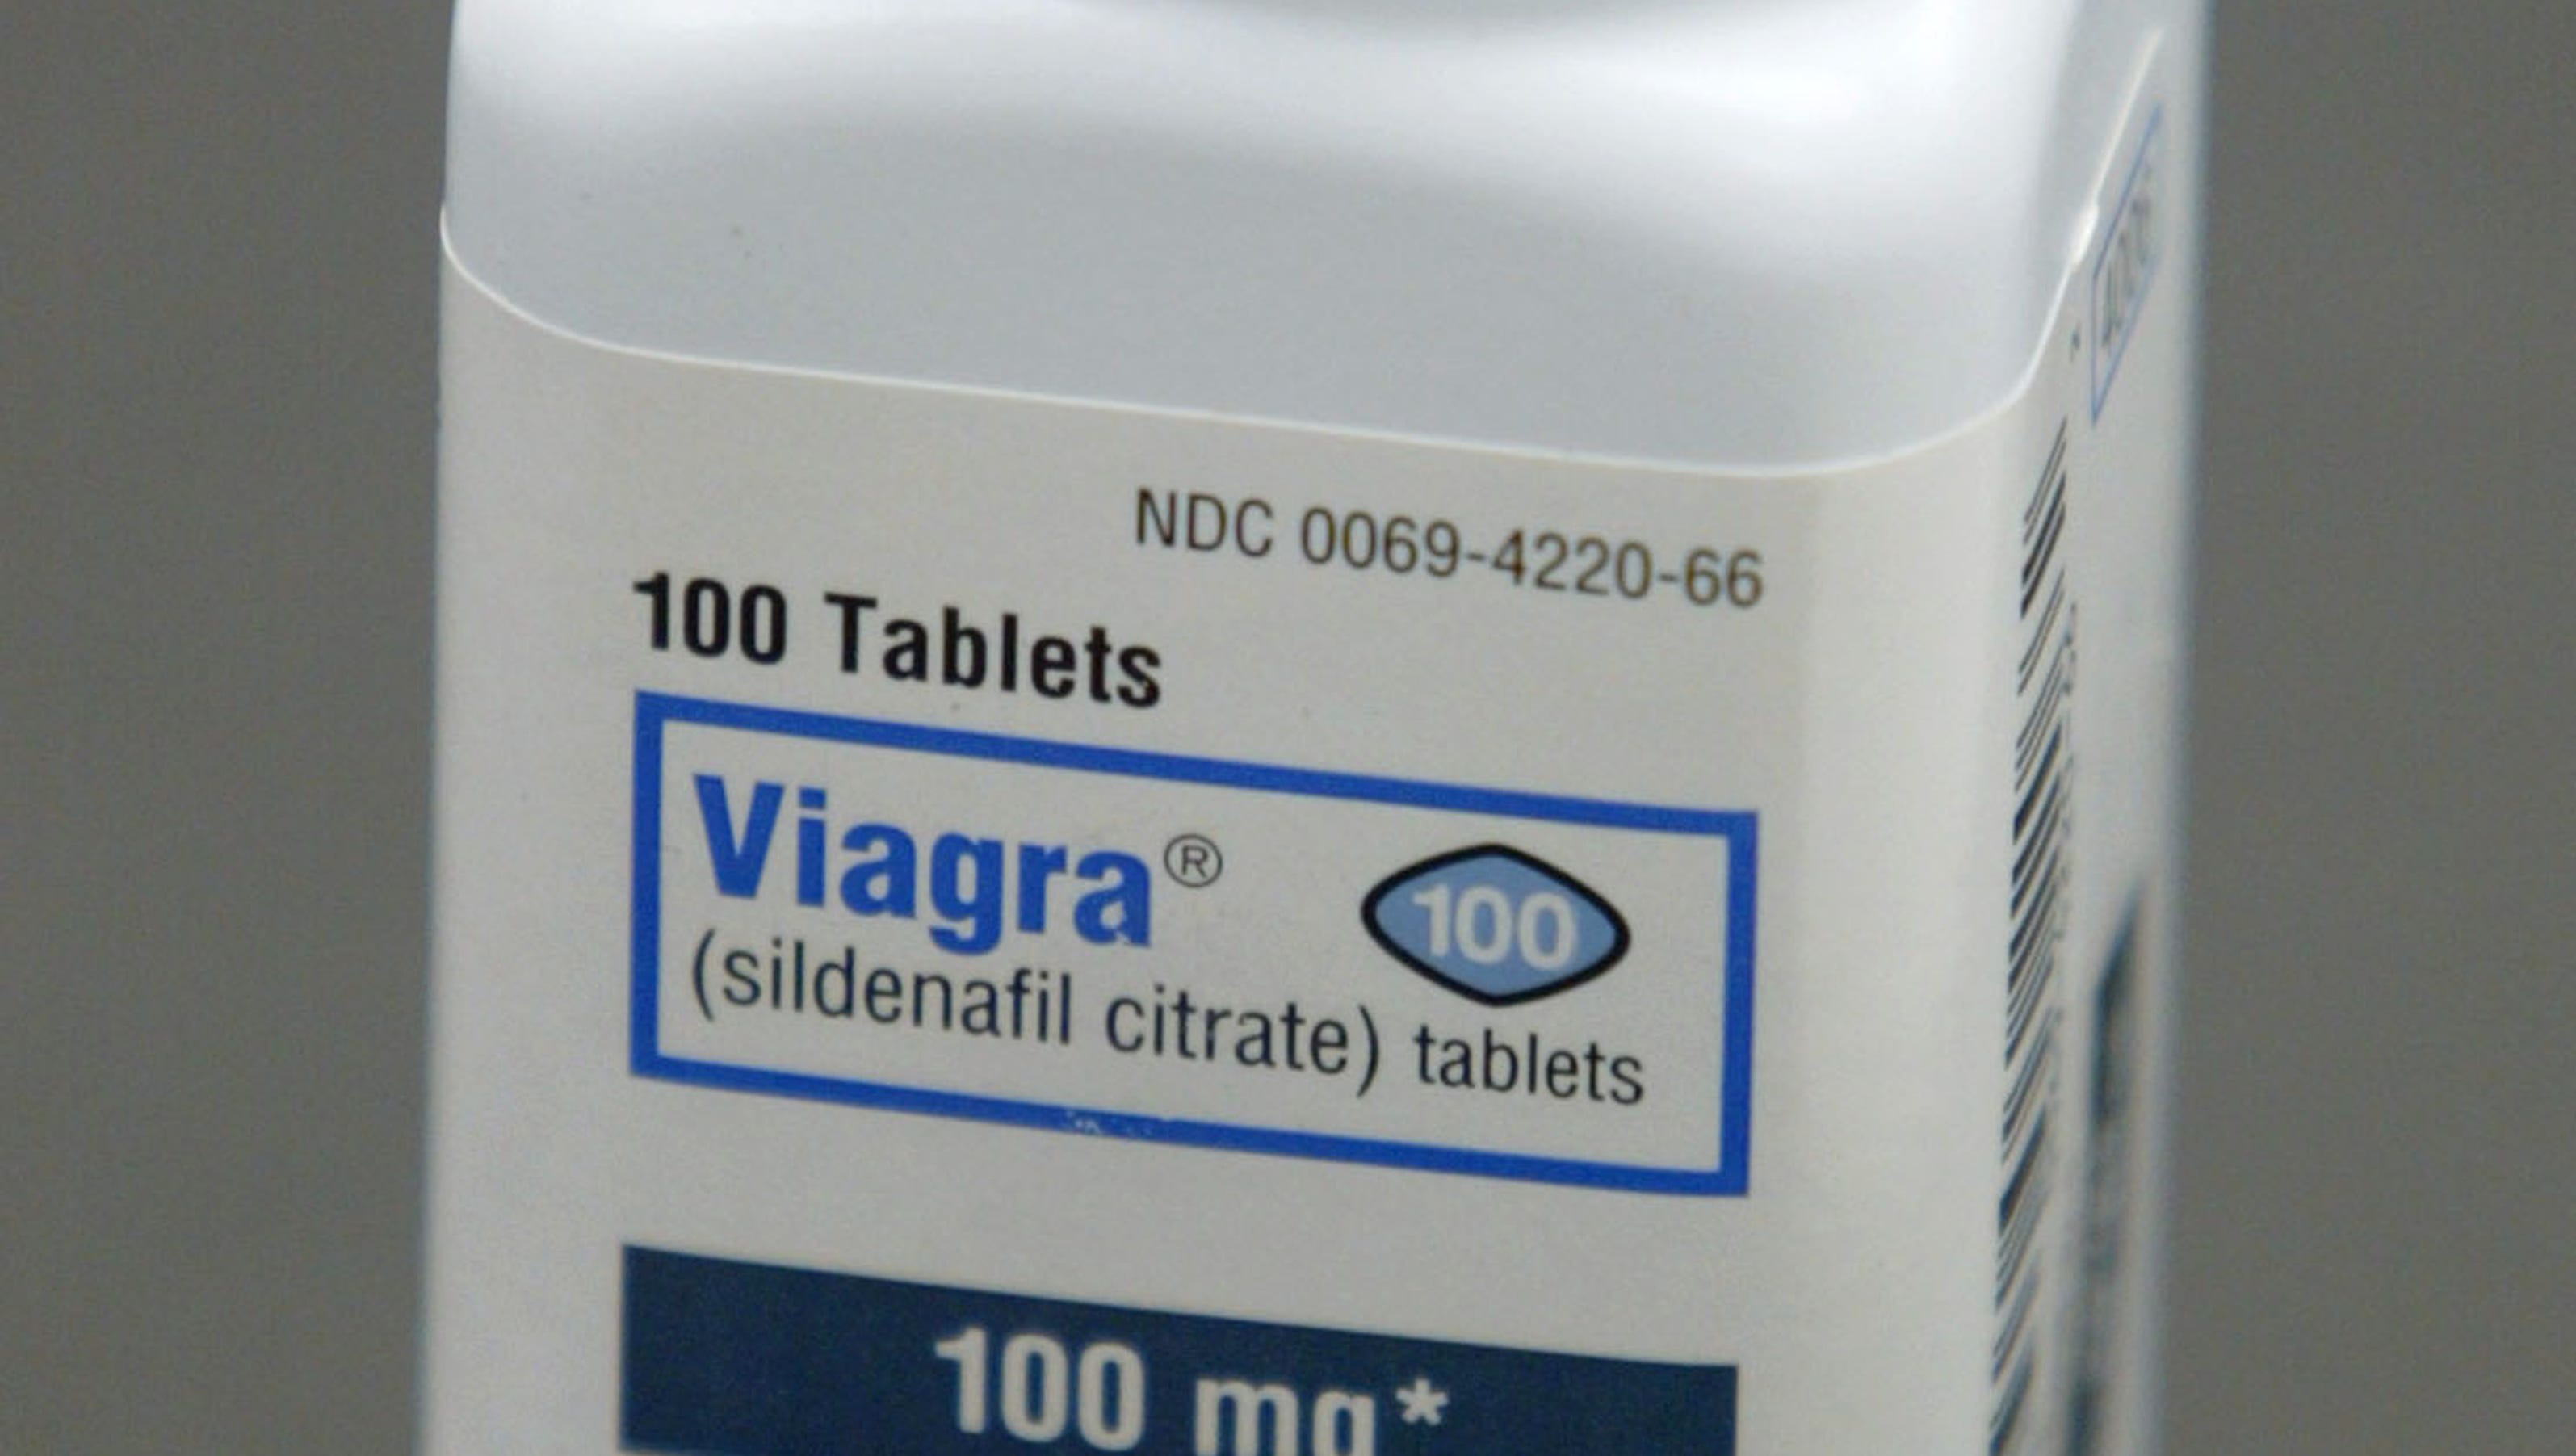 Report Dod Spends 84m A Year On Viagra Similar Meds